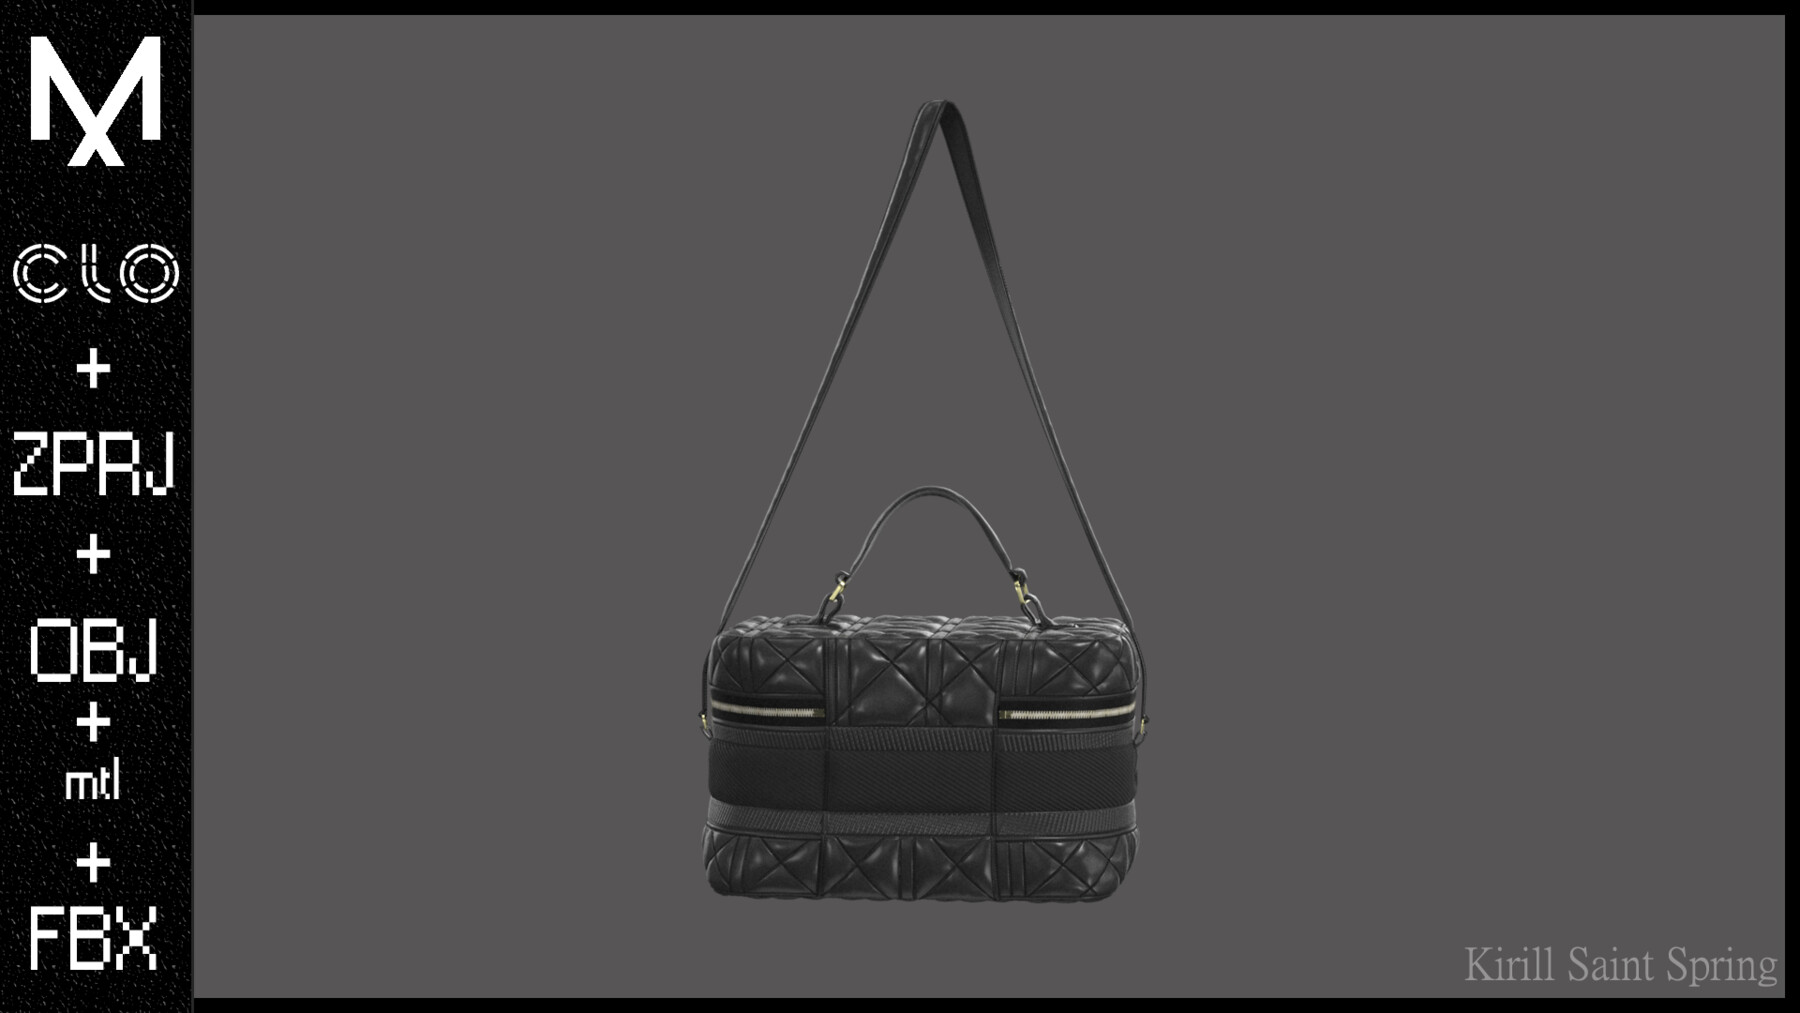 ArtStation - Louis Vuitton Bag OBJ mtl FBX ZPRJ